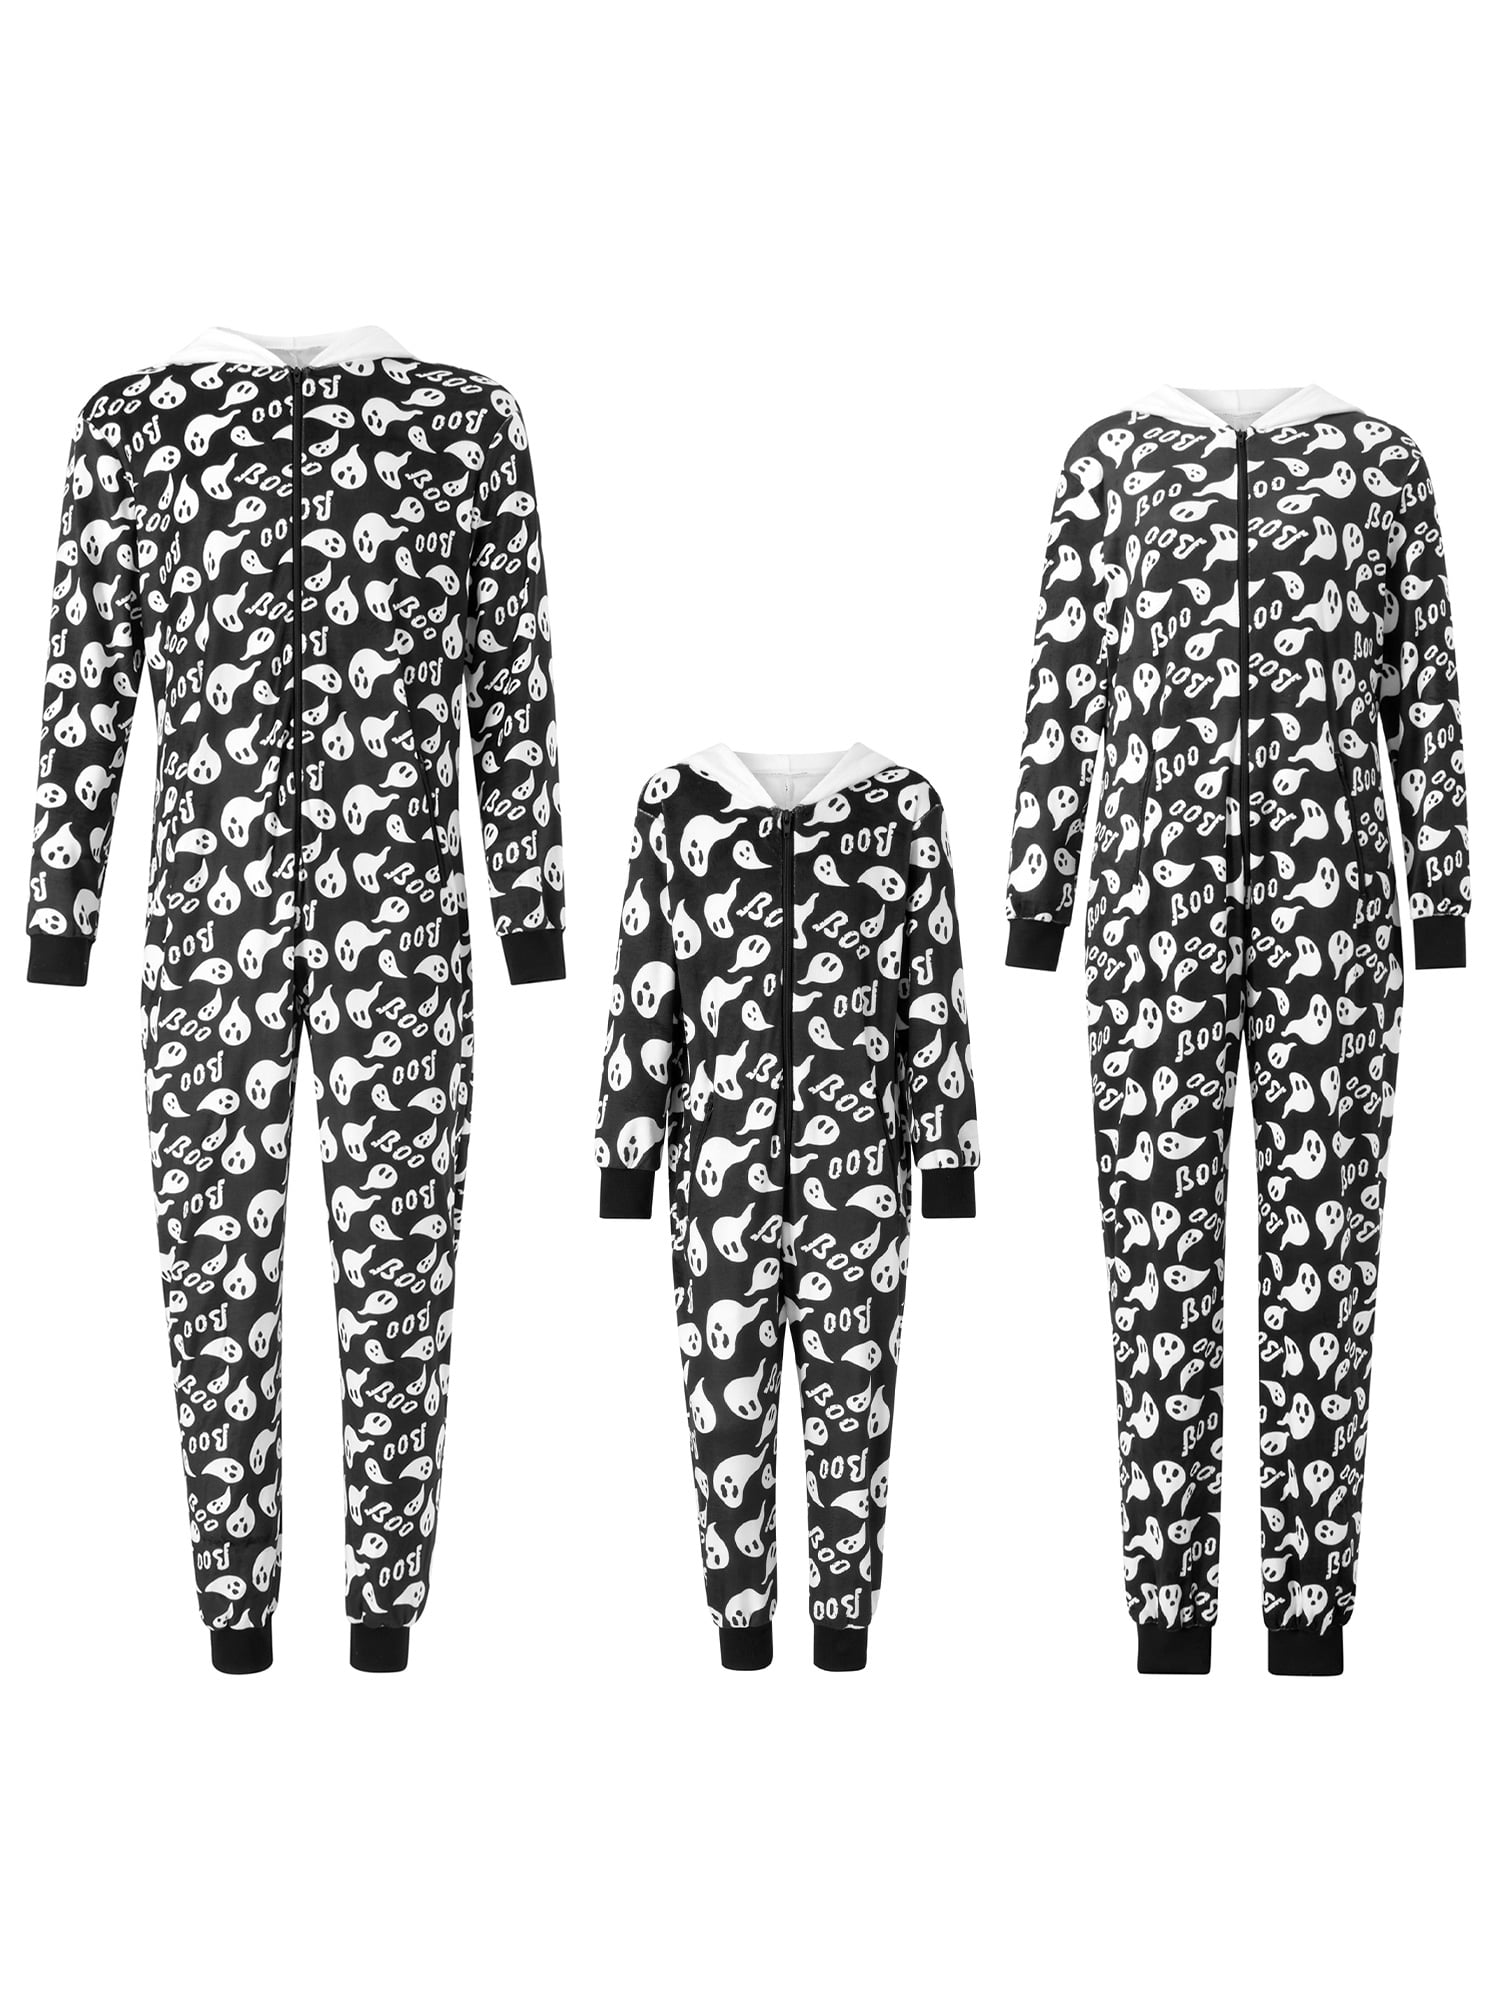 Family Halloween Pjs Matching Sets Ghost Print Pajamas Sets Long Sleeve ...